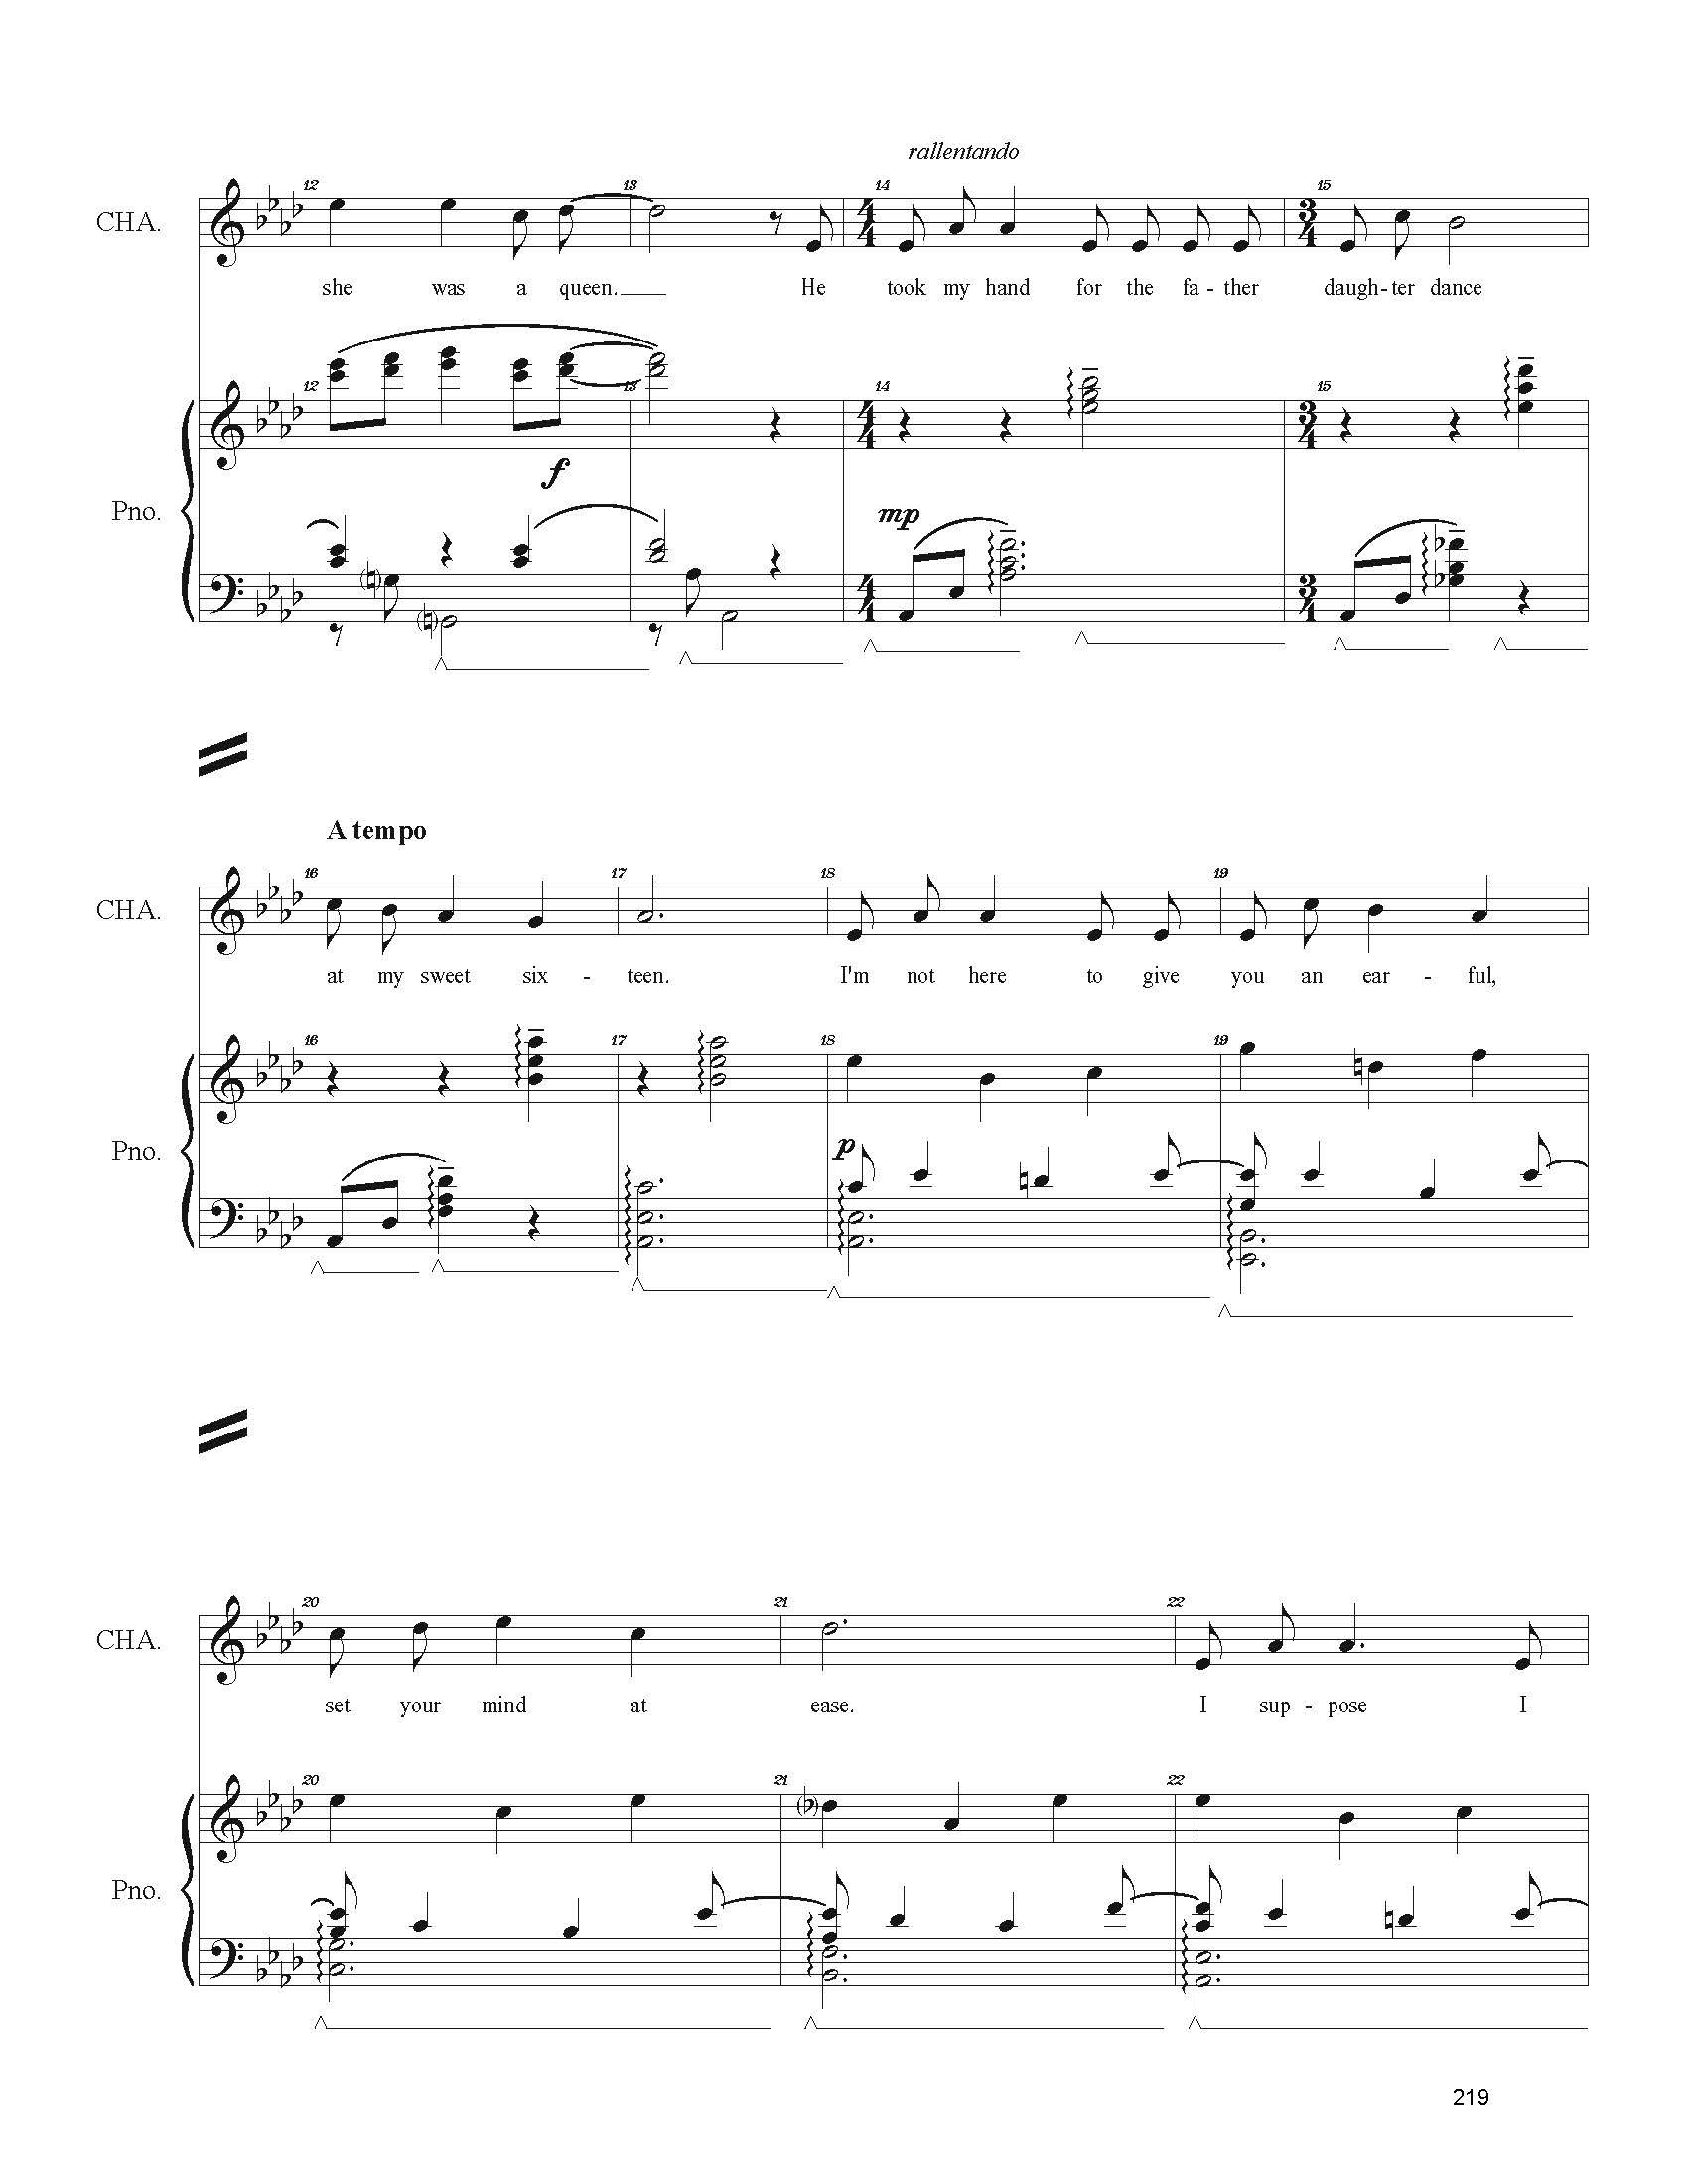 FULL PIANO VOCAL SCORE DRAFT 1 - Score_Page_219.jpg